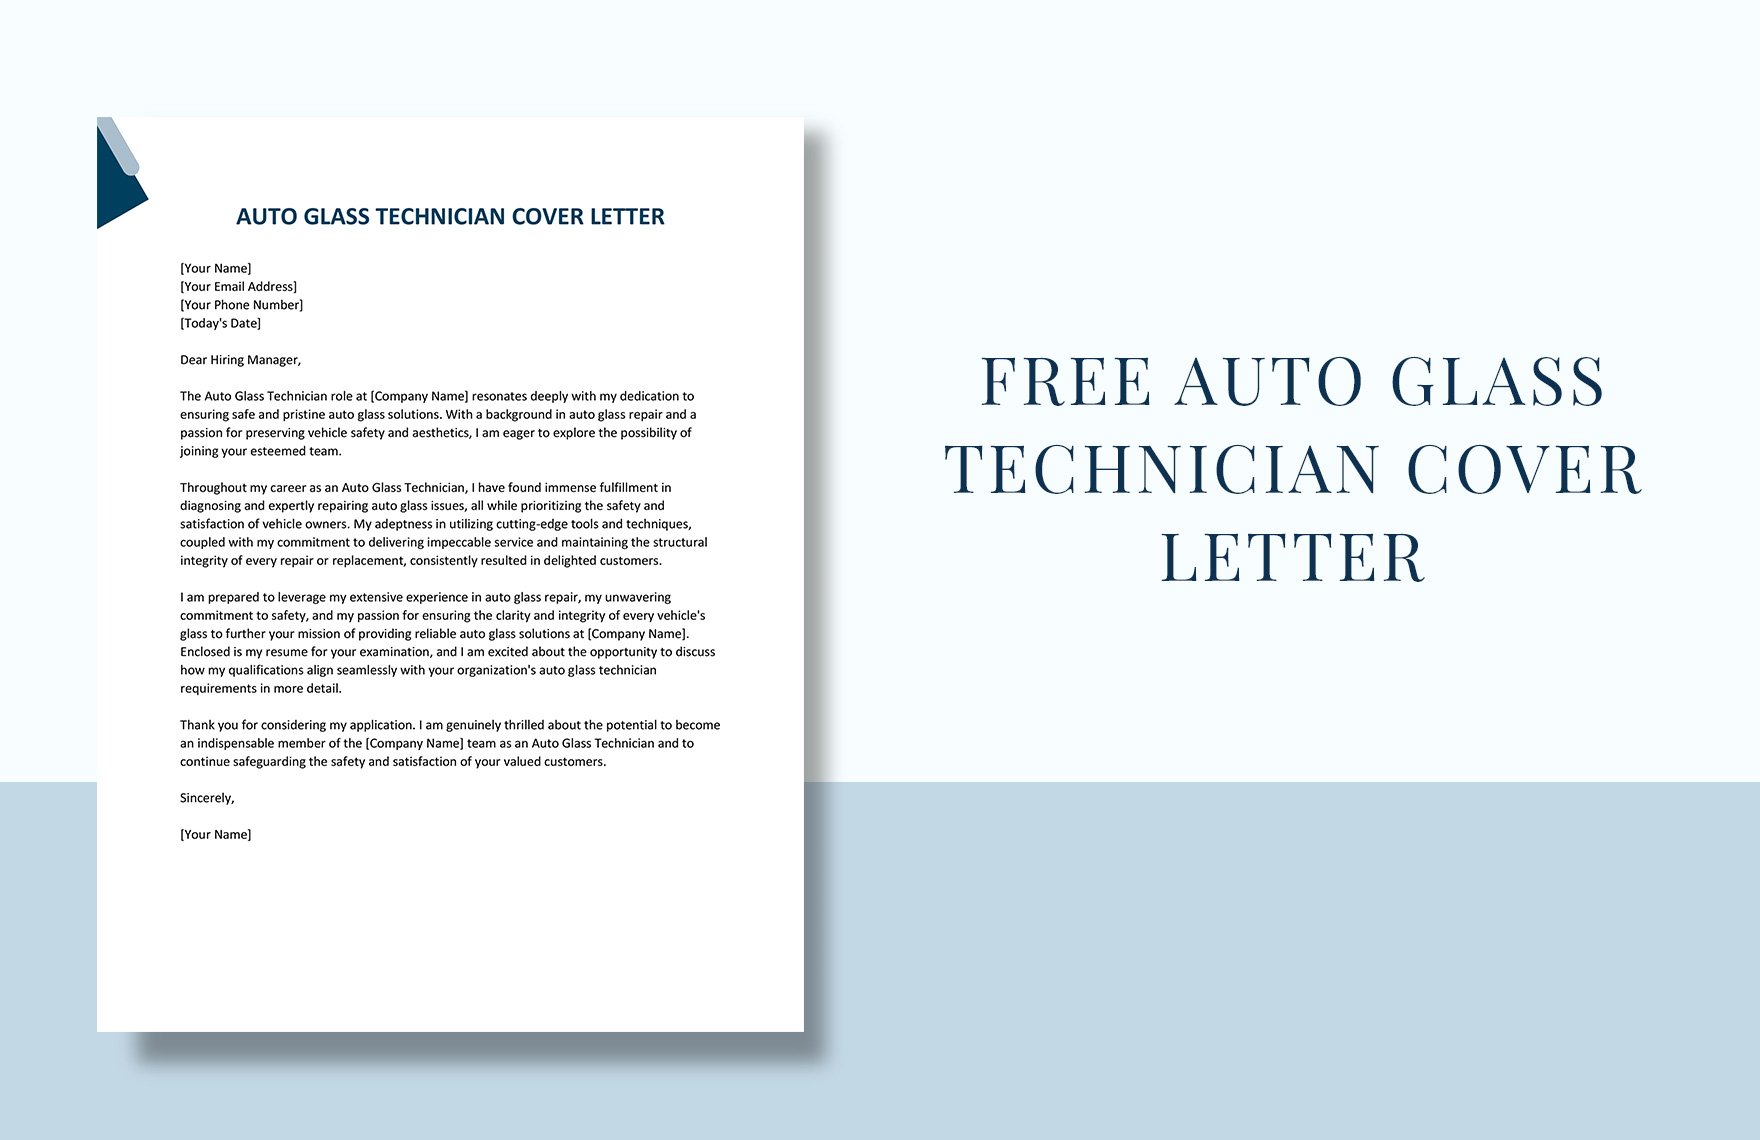 Auto Glass Technician Cover Letter in Word, Google Docs